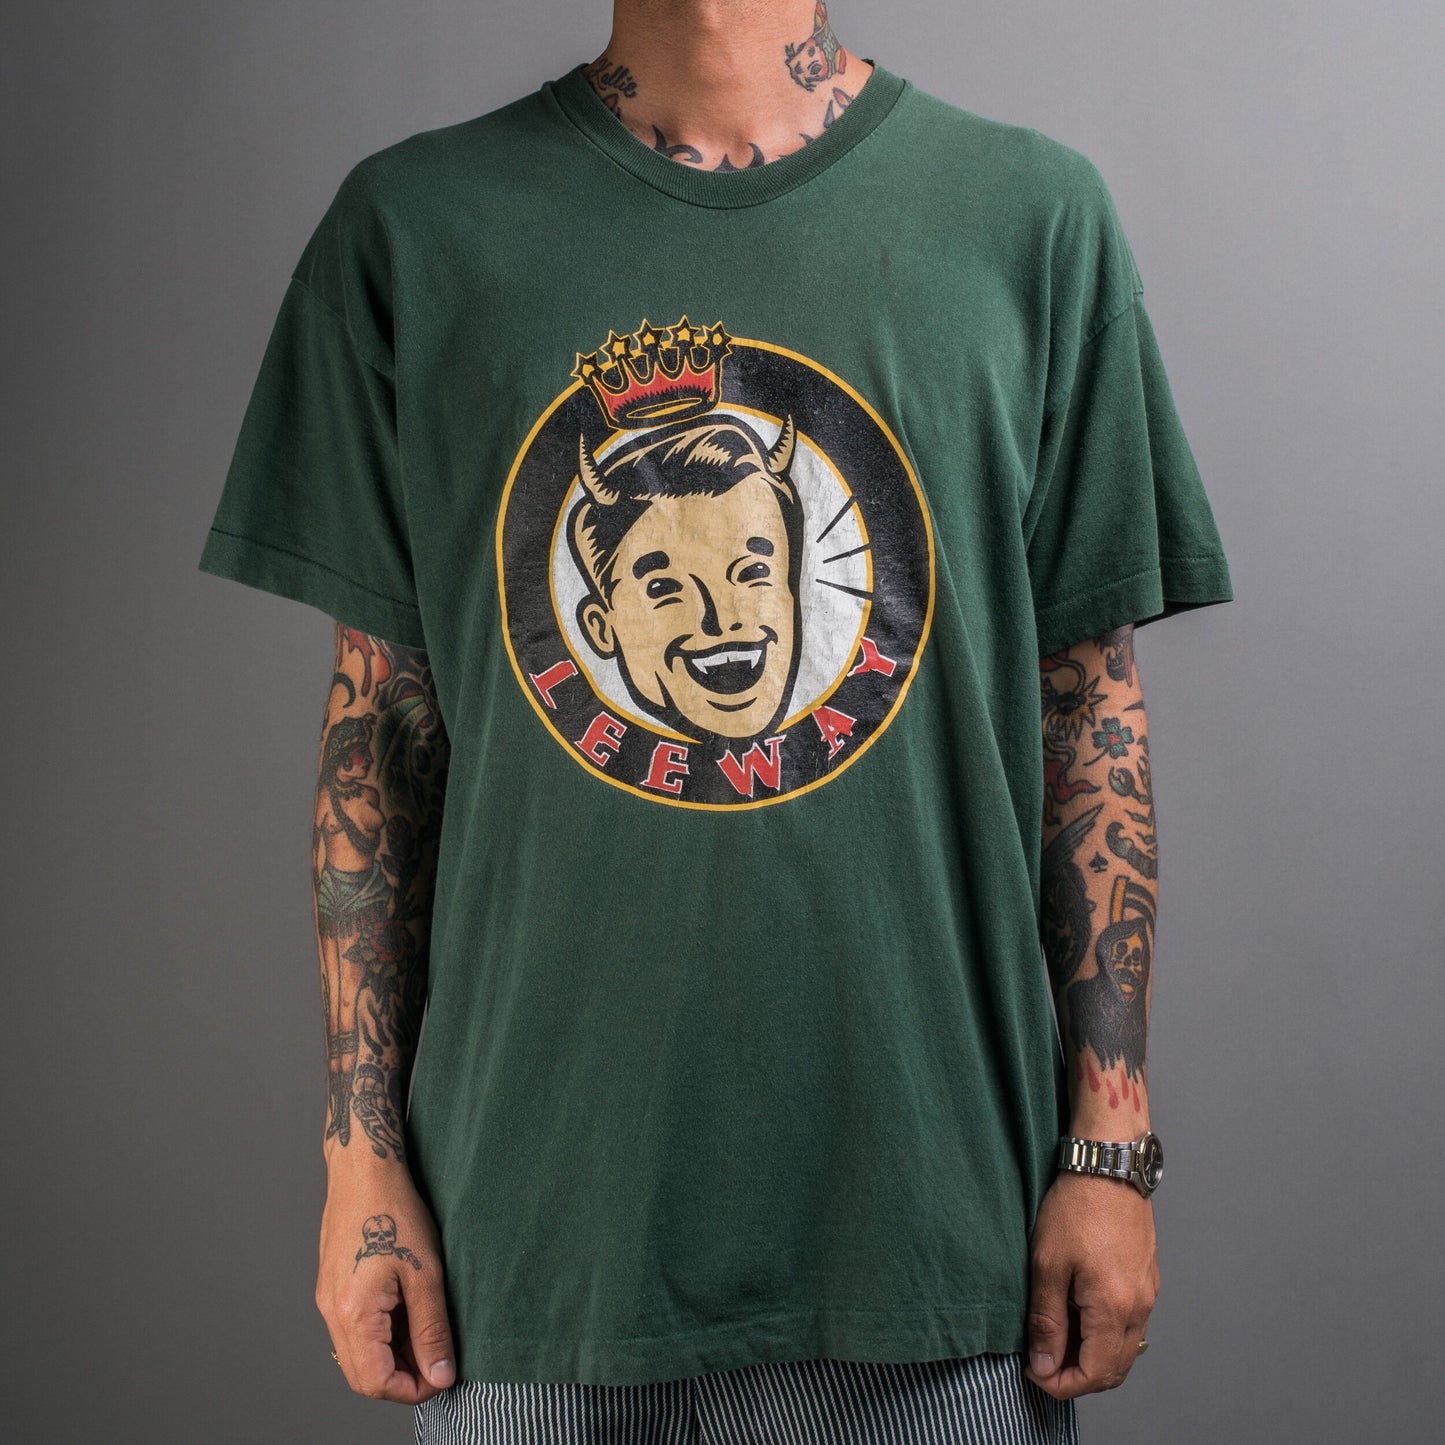 Vintage 1994 Leeway Adult Crush Tour T-Shirt